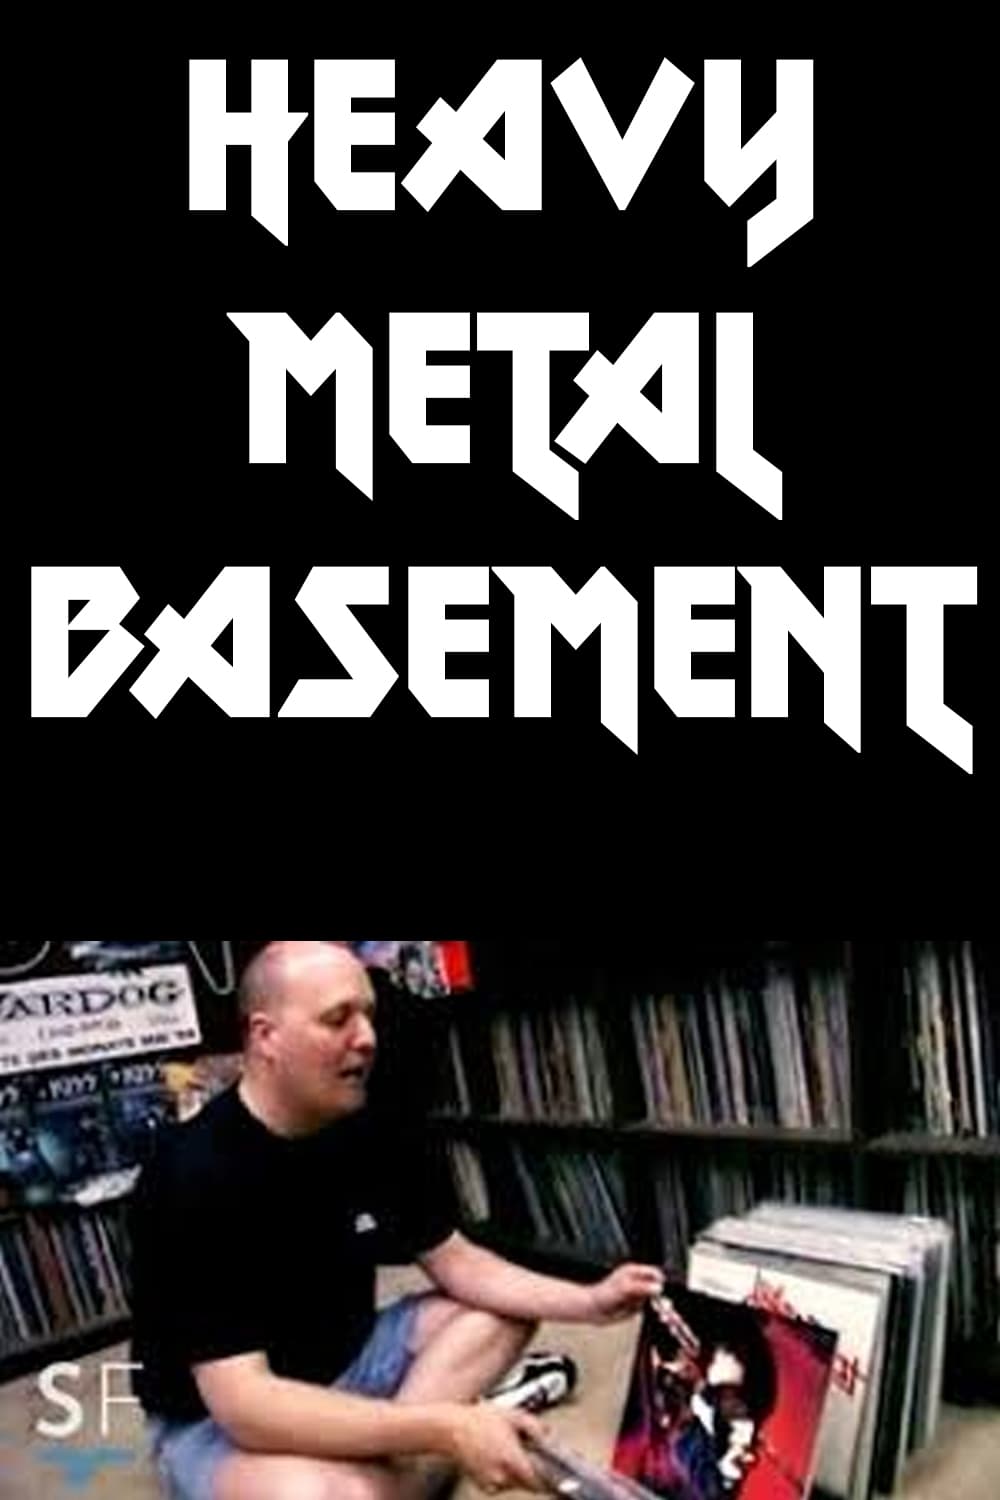 Heavy Metal Basement